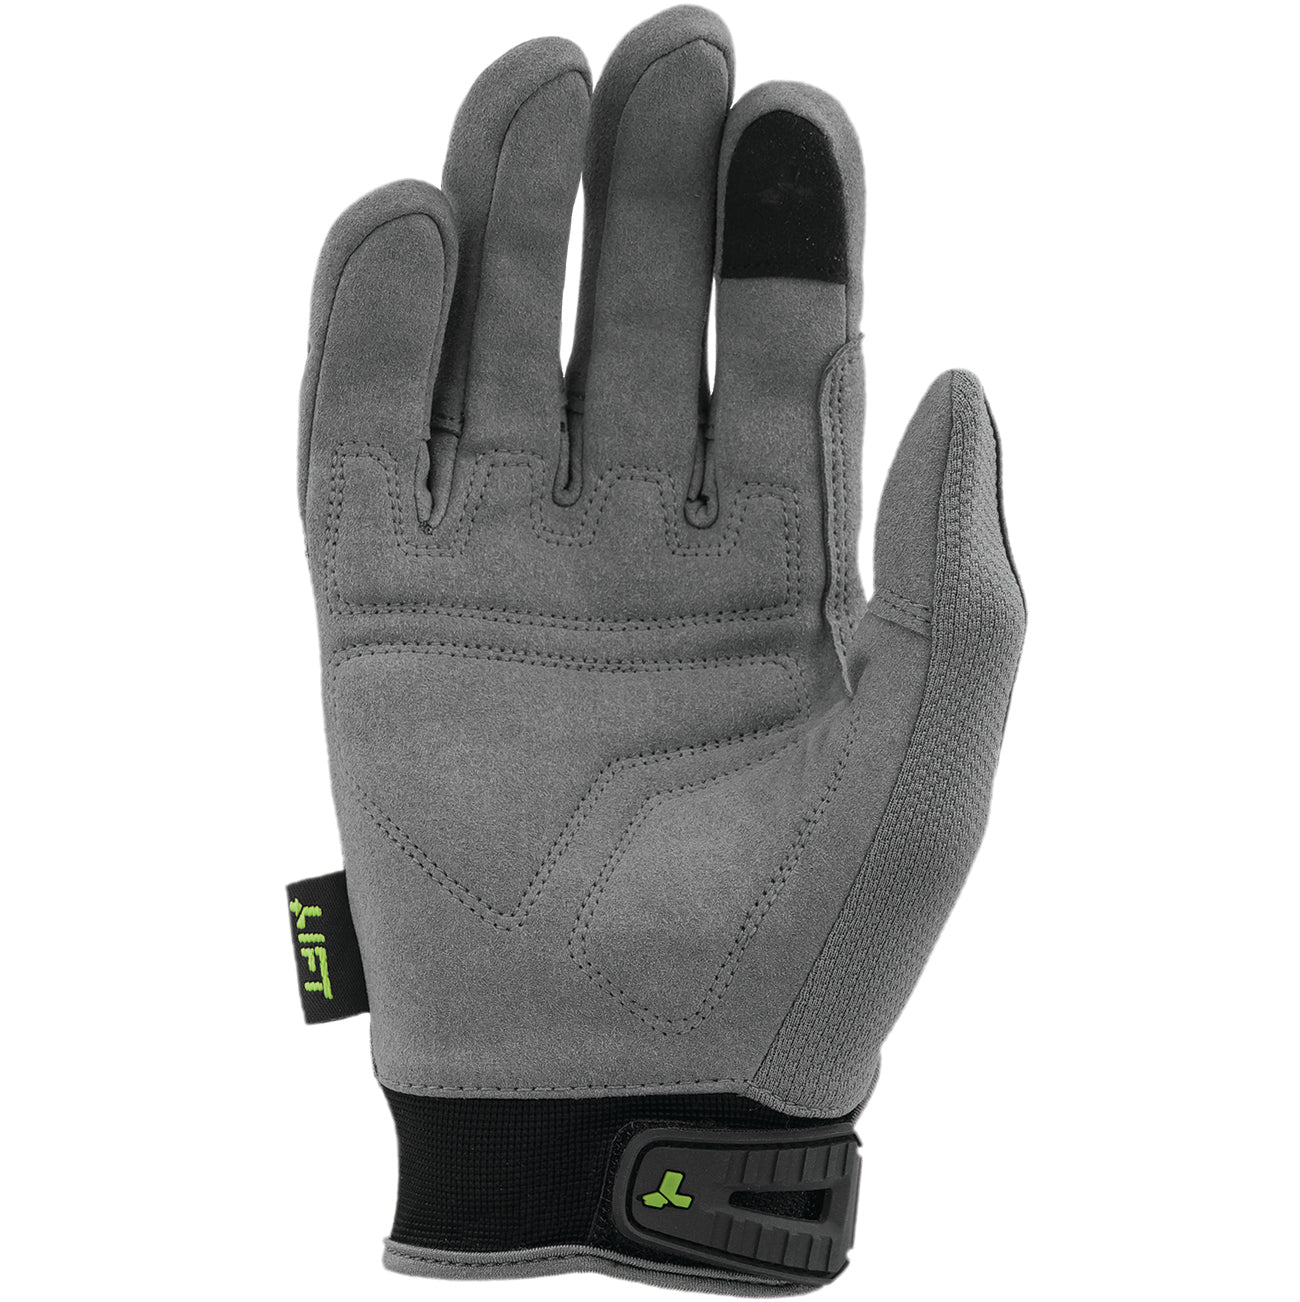 LIFT Safety - OPTION Glove (Grey)